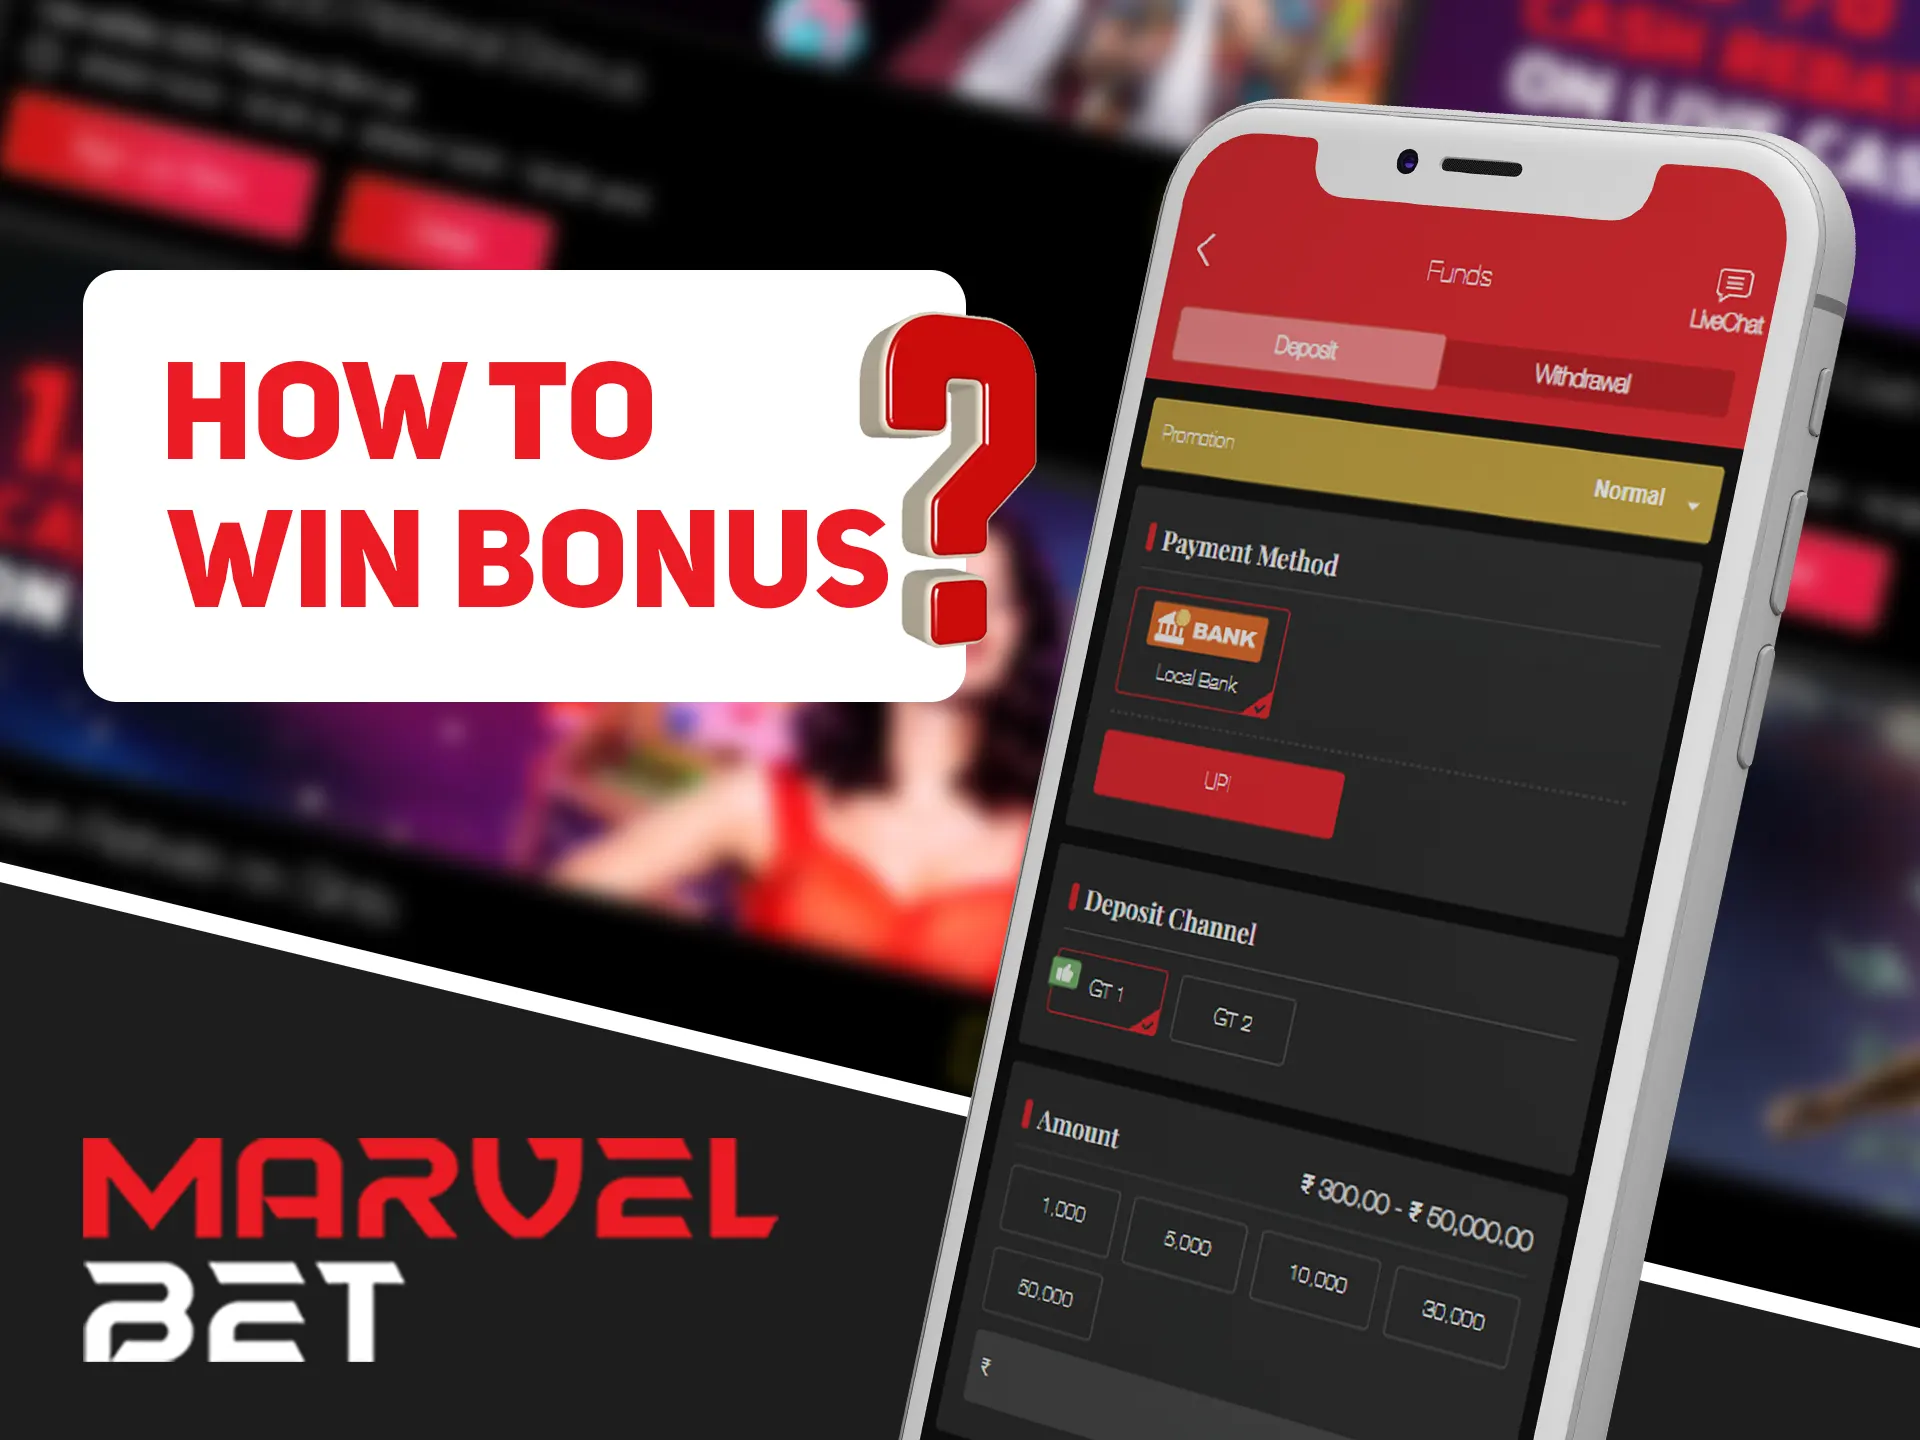 Win your bonus back by making deposit at Marvelbet.